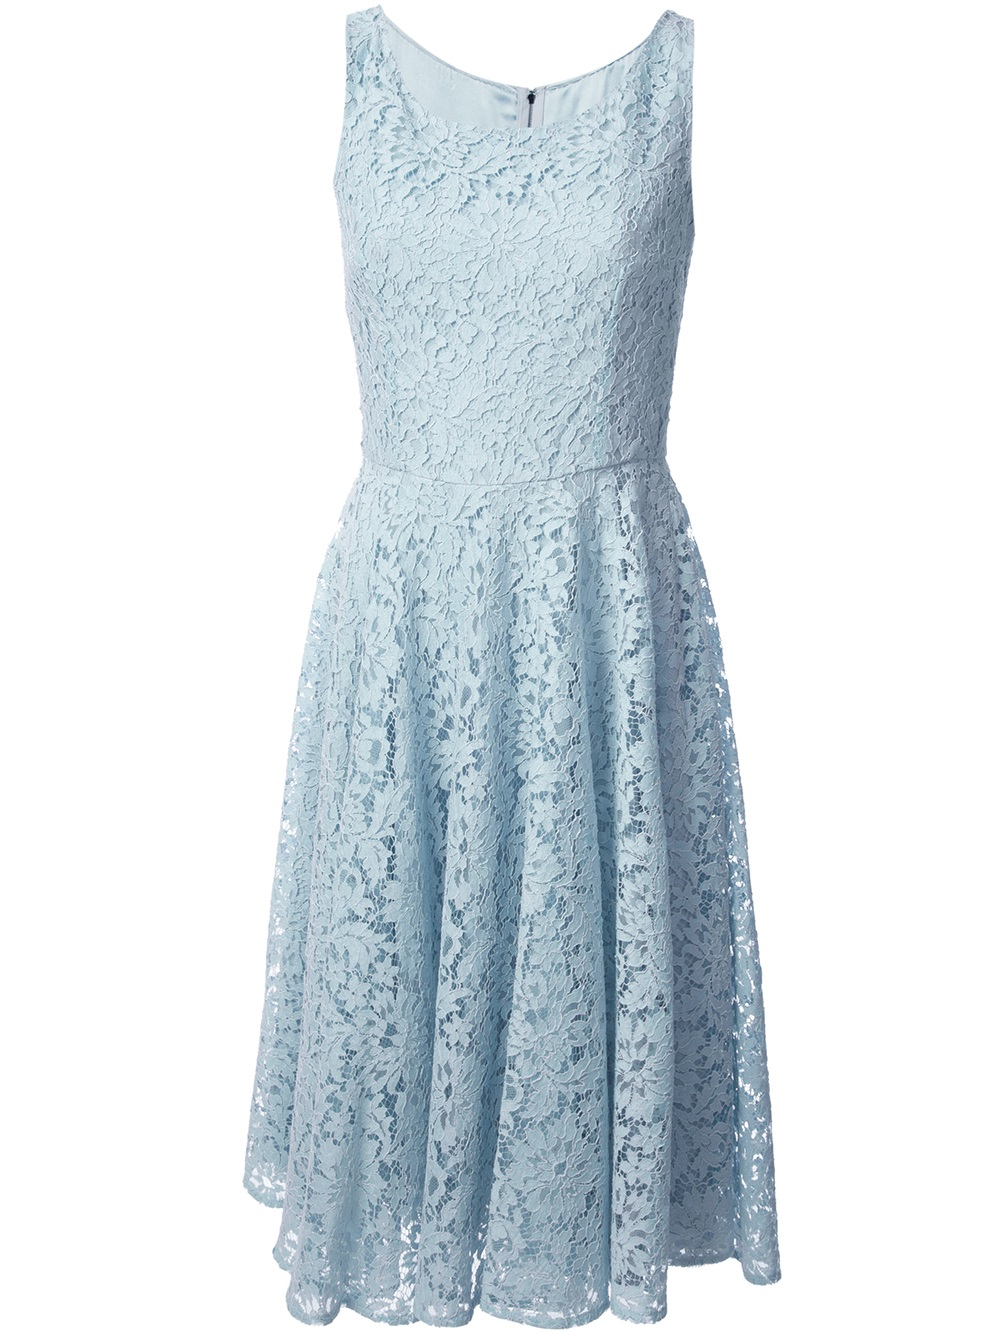 Dolce & Gabbana Sleeveless Lace Dress in Blue | Lyst